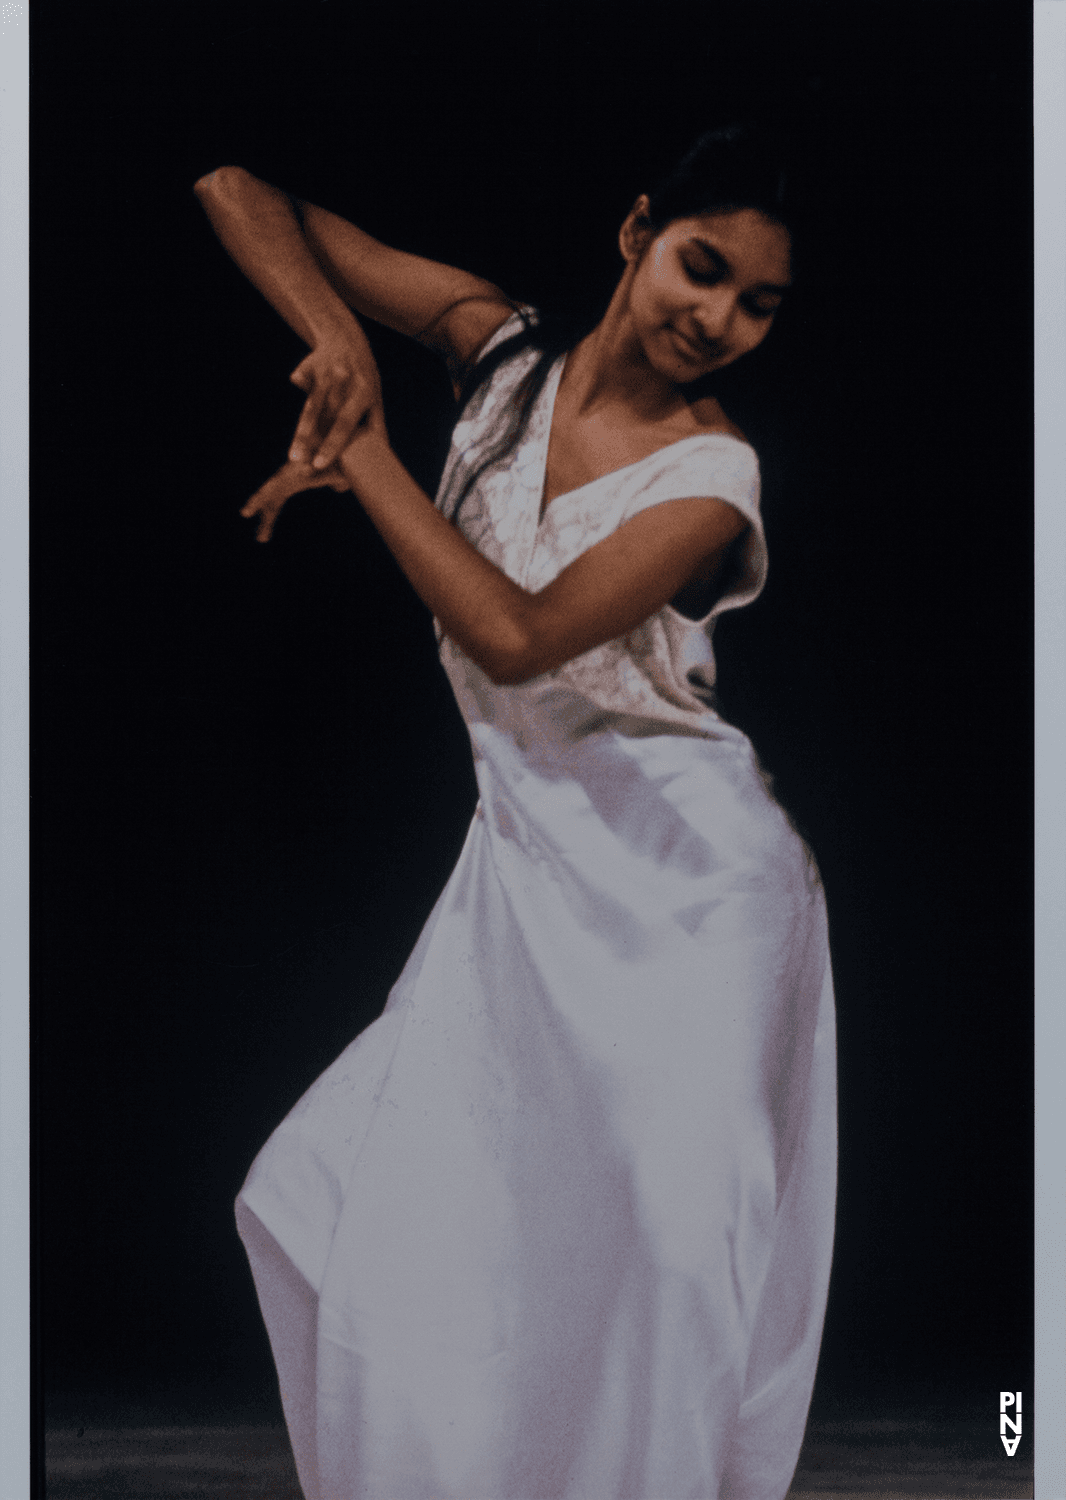 Shantala Shivalingappa in “O Dido” by Pina Bausch